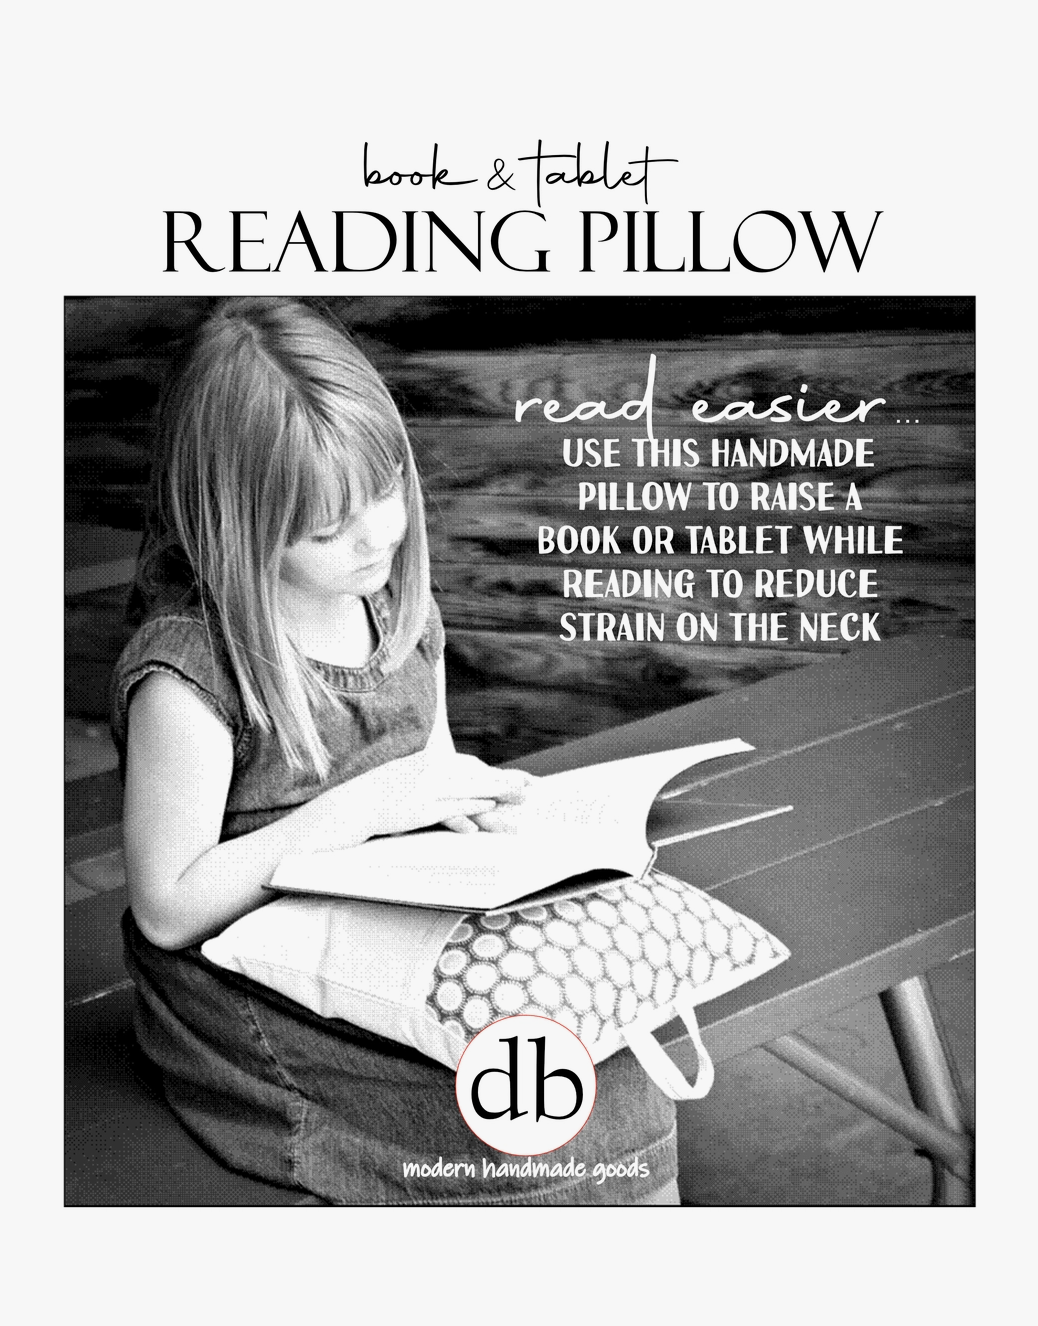 Danielle Reading Pillow